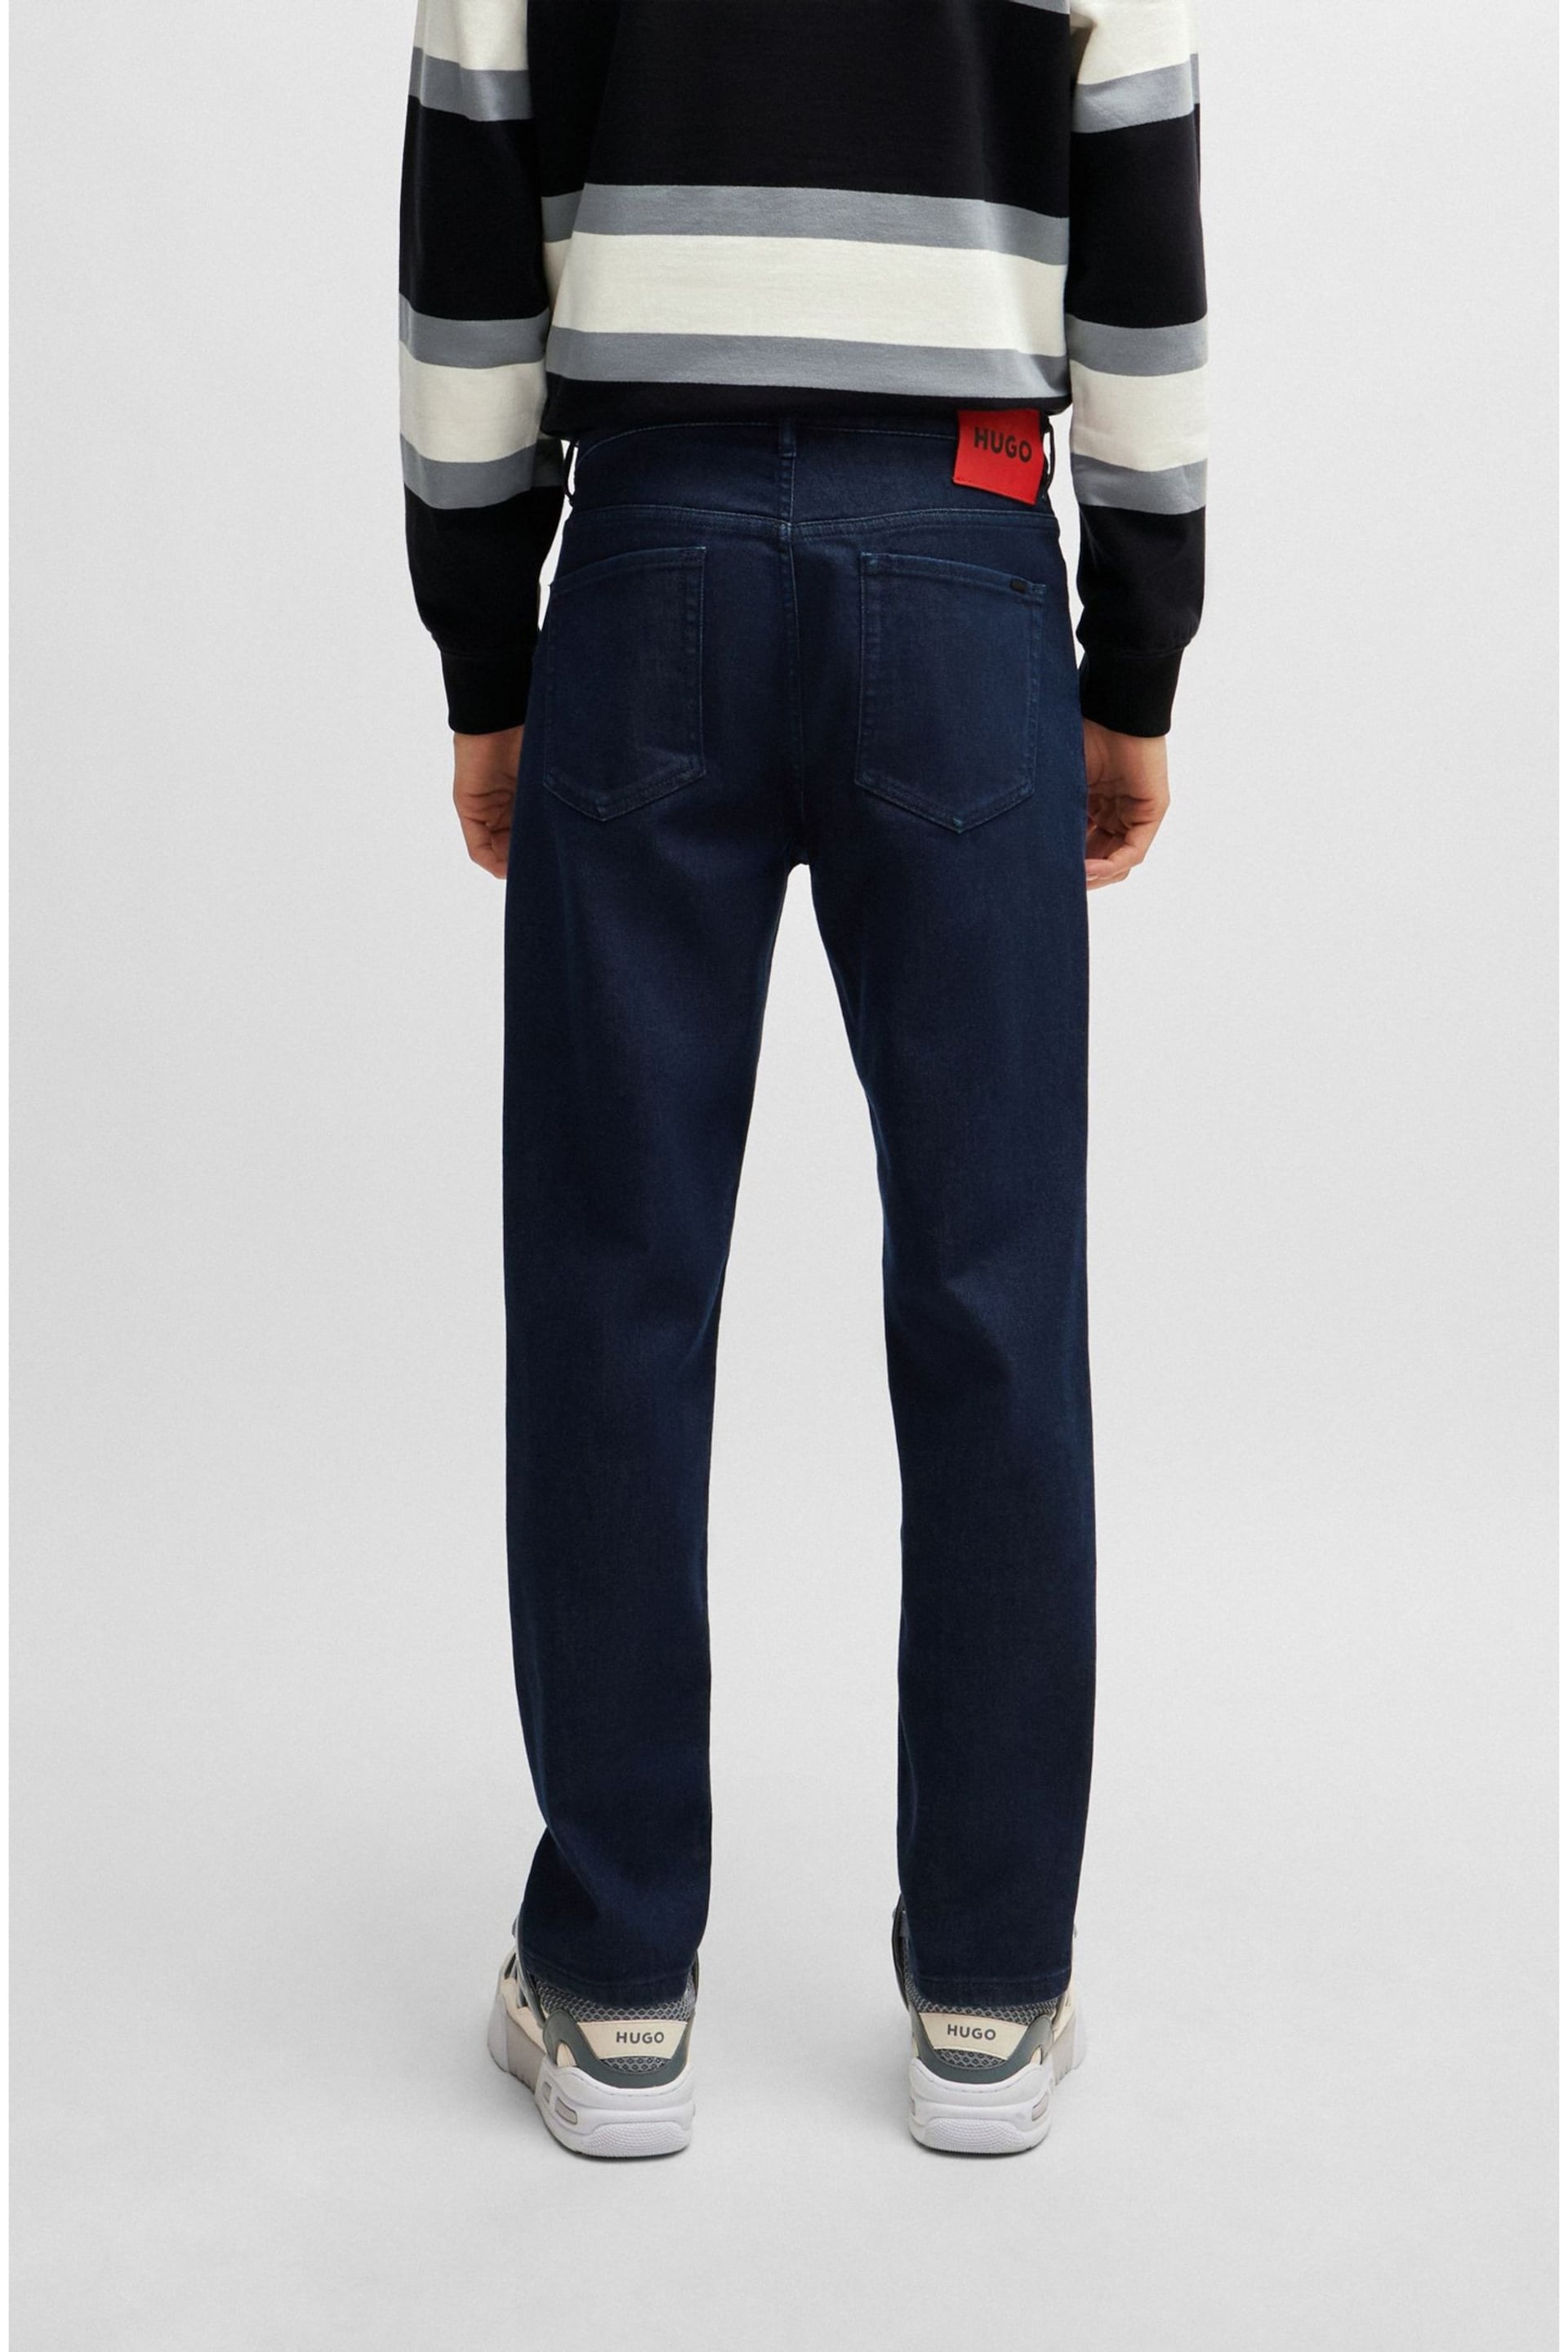 HUGO Tapered-Fit Jeans in Dark-Blue Comfort-Stretch Denim - Image 2 of 5